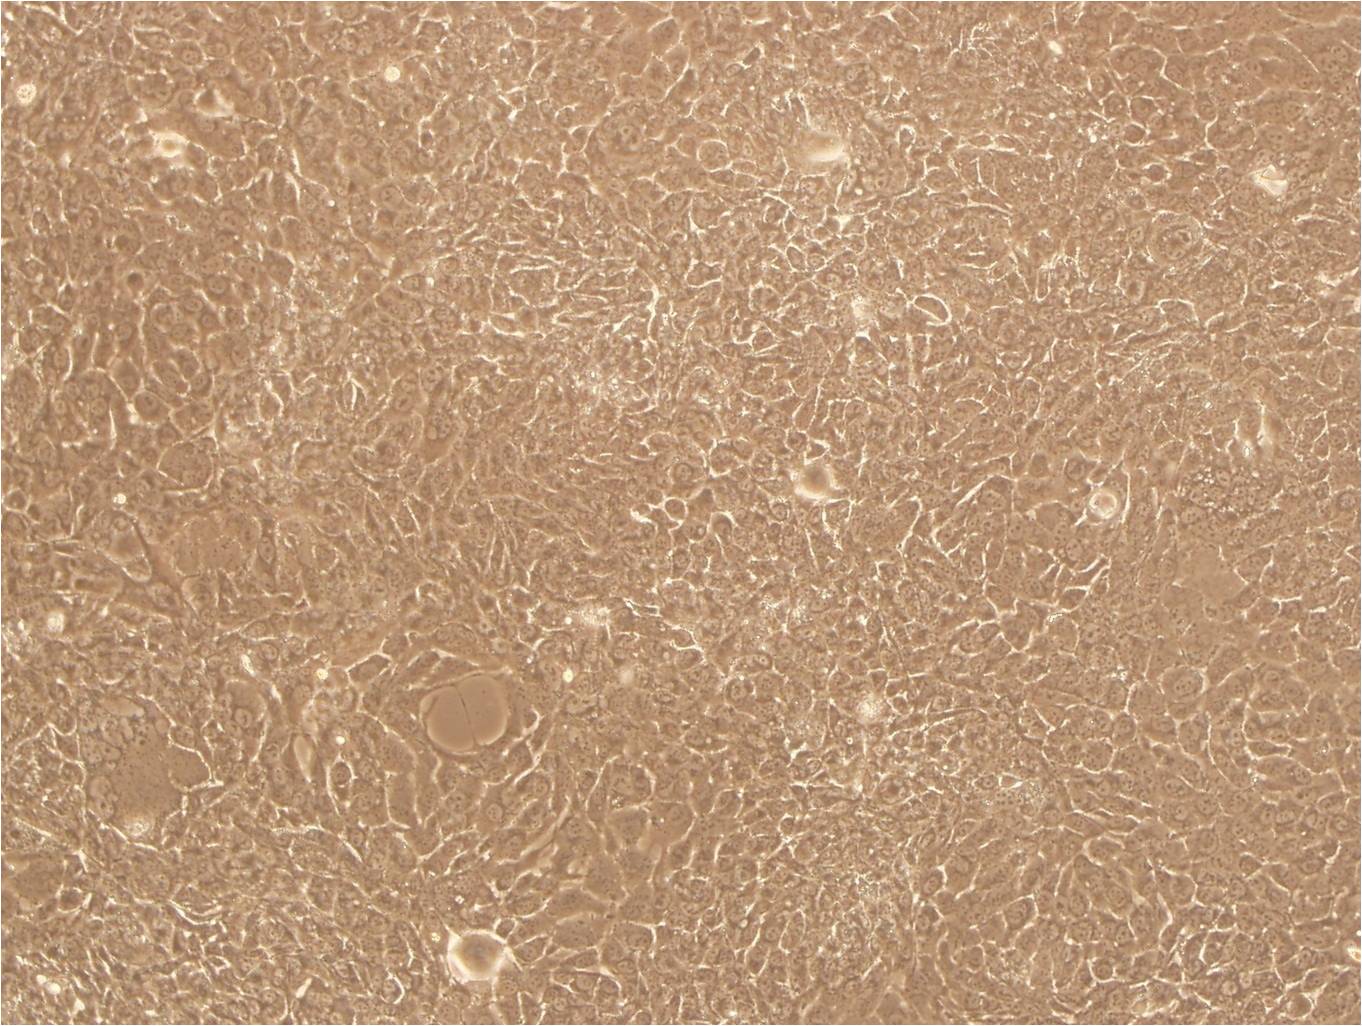 EJ-1 epithelioid cells人膀胱癌细胞系,EJ-1 epithelioid cells